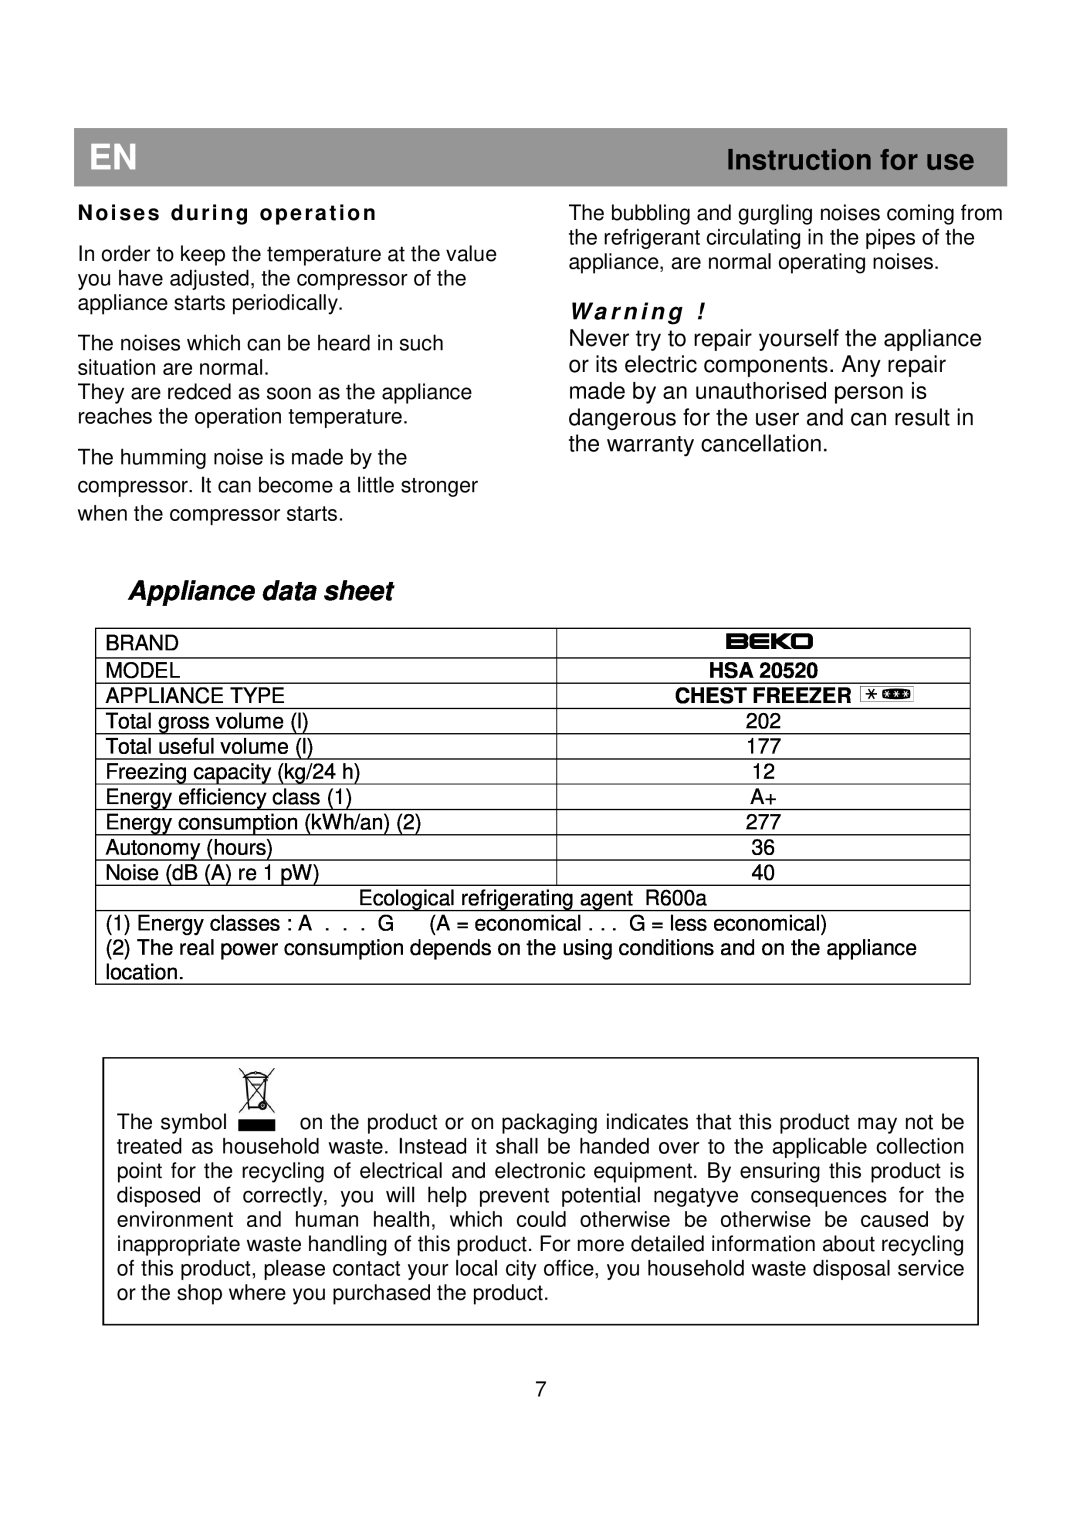 Beko HSA 20520 manual Appliance data sheet, Instruction for use, W a r n i n g 